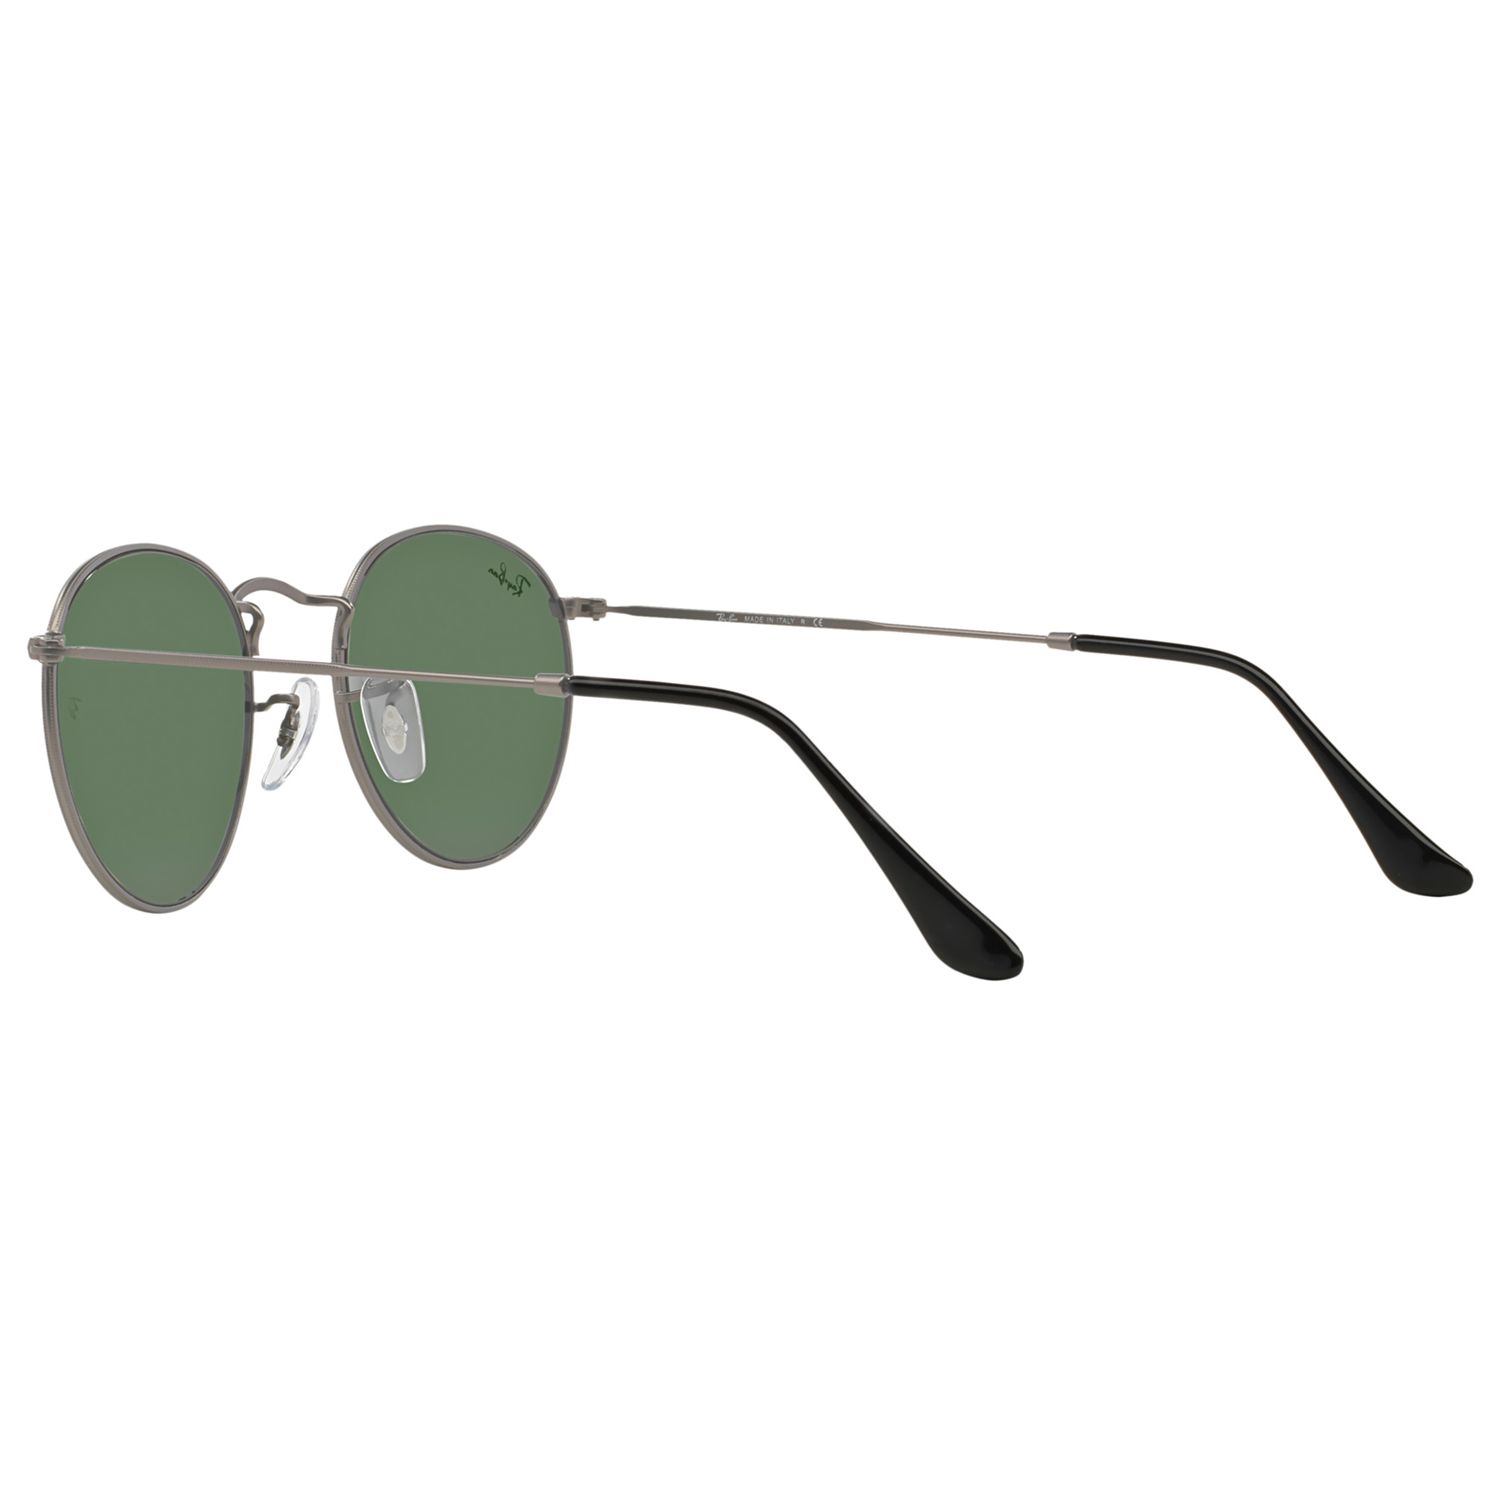 Ray-Ban RB3447 Round Sunglasses, Matte Gunmetal at John Lewis & Partners